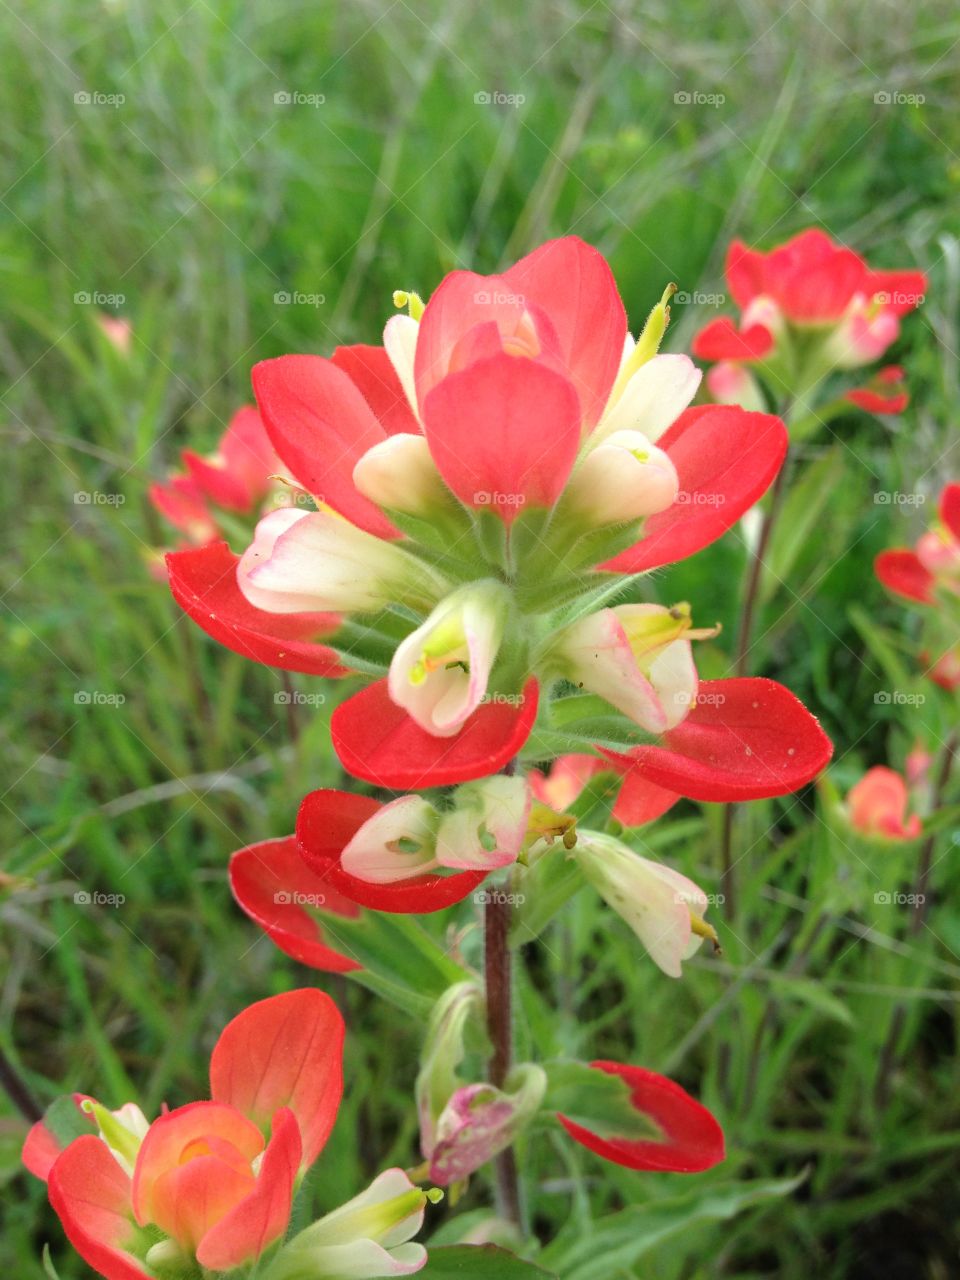 Texas wildflower - Indian Paintbrush